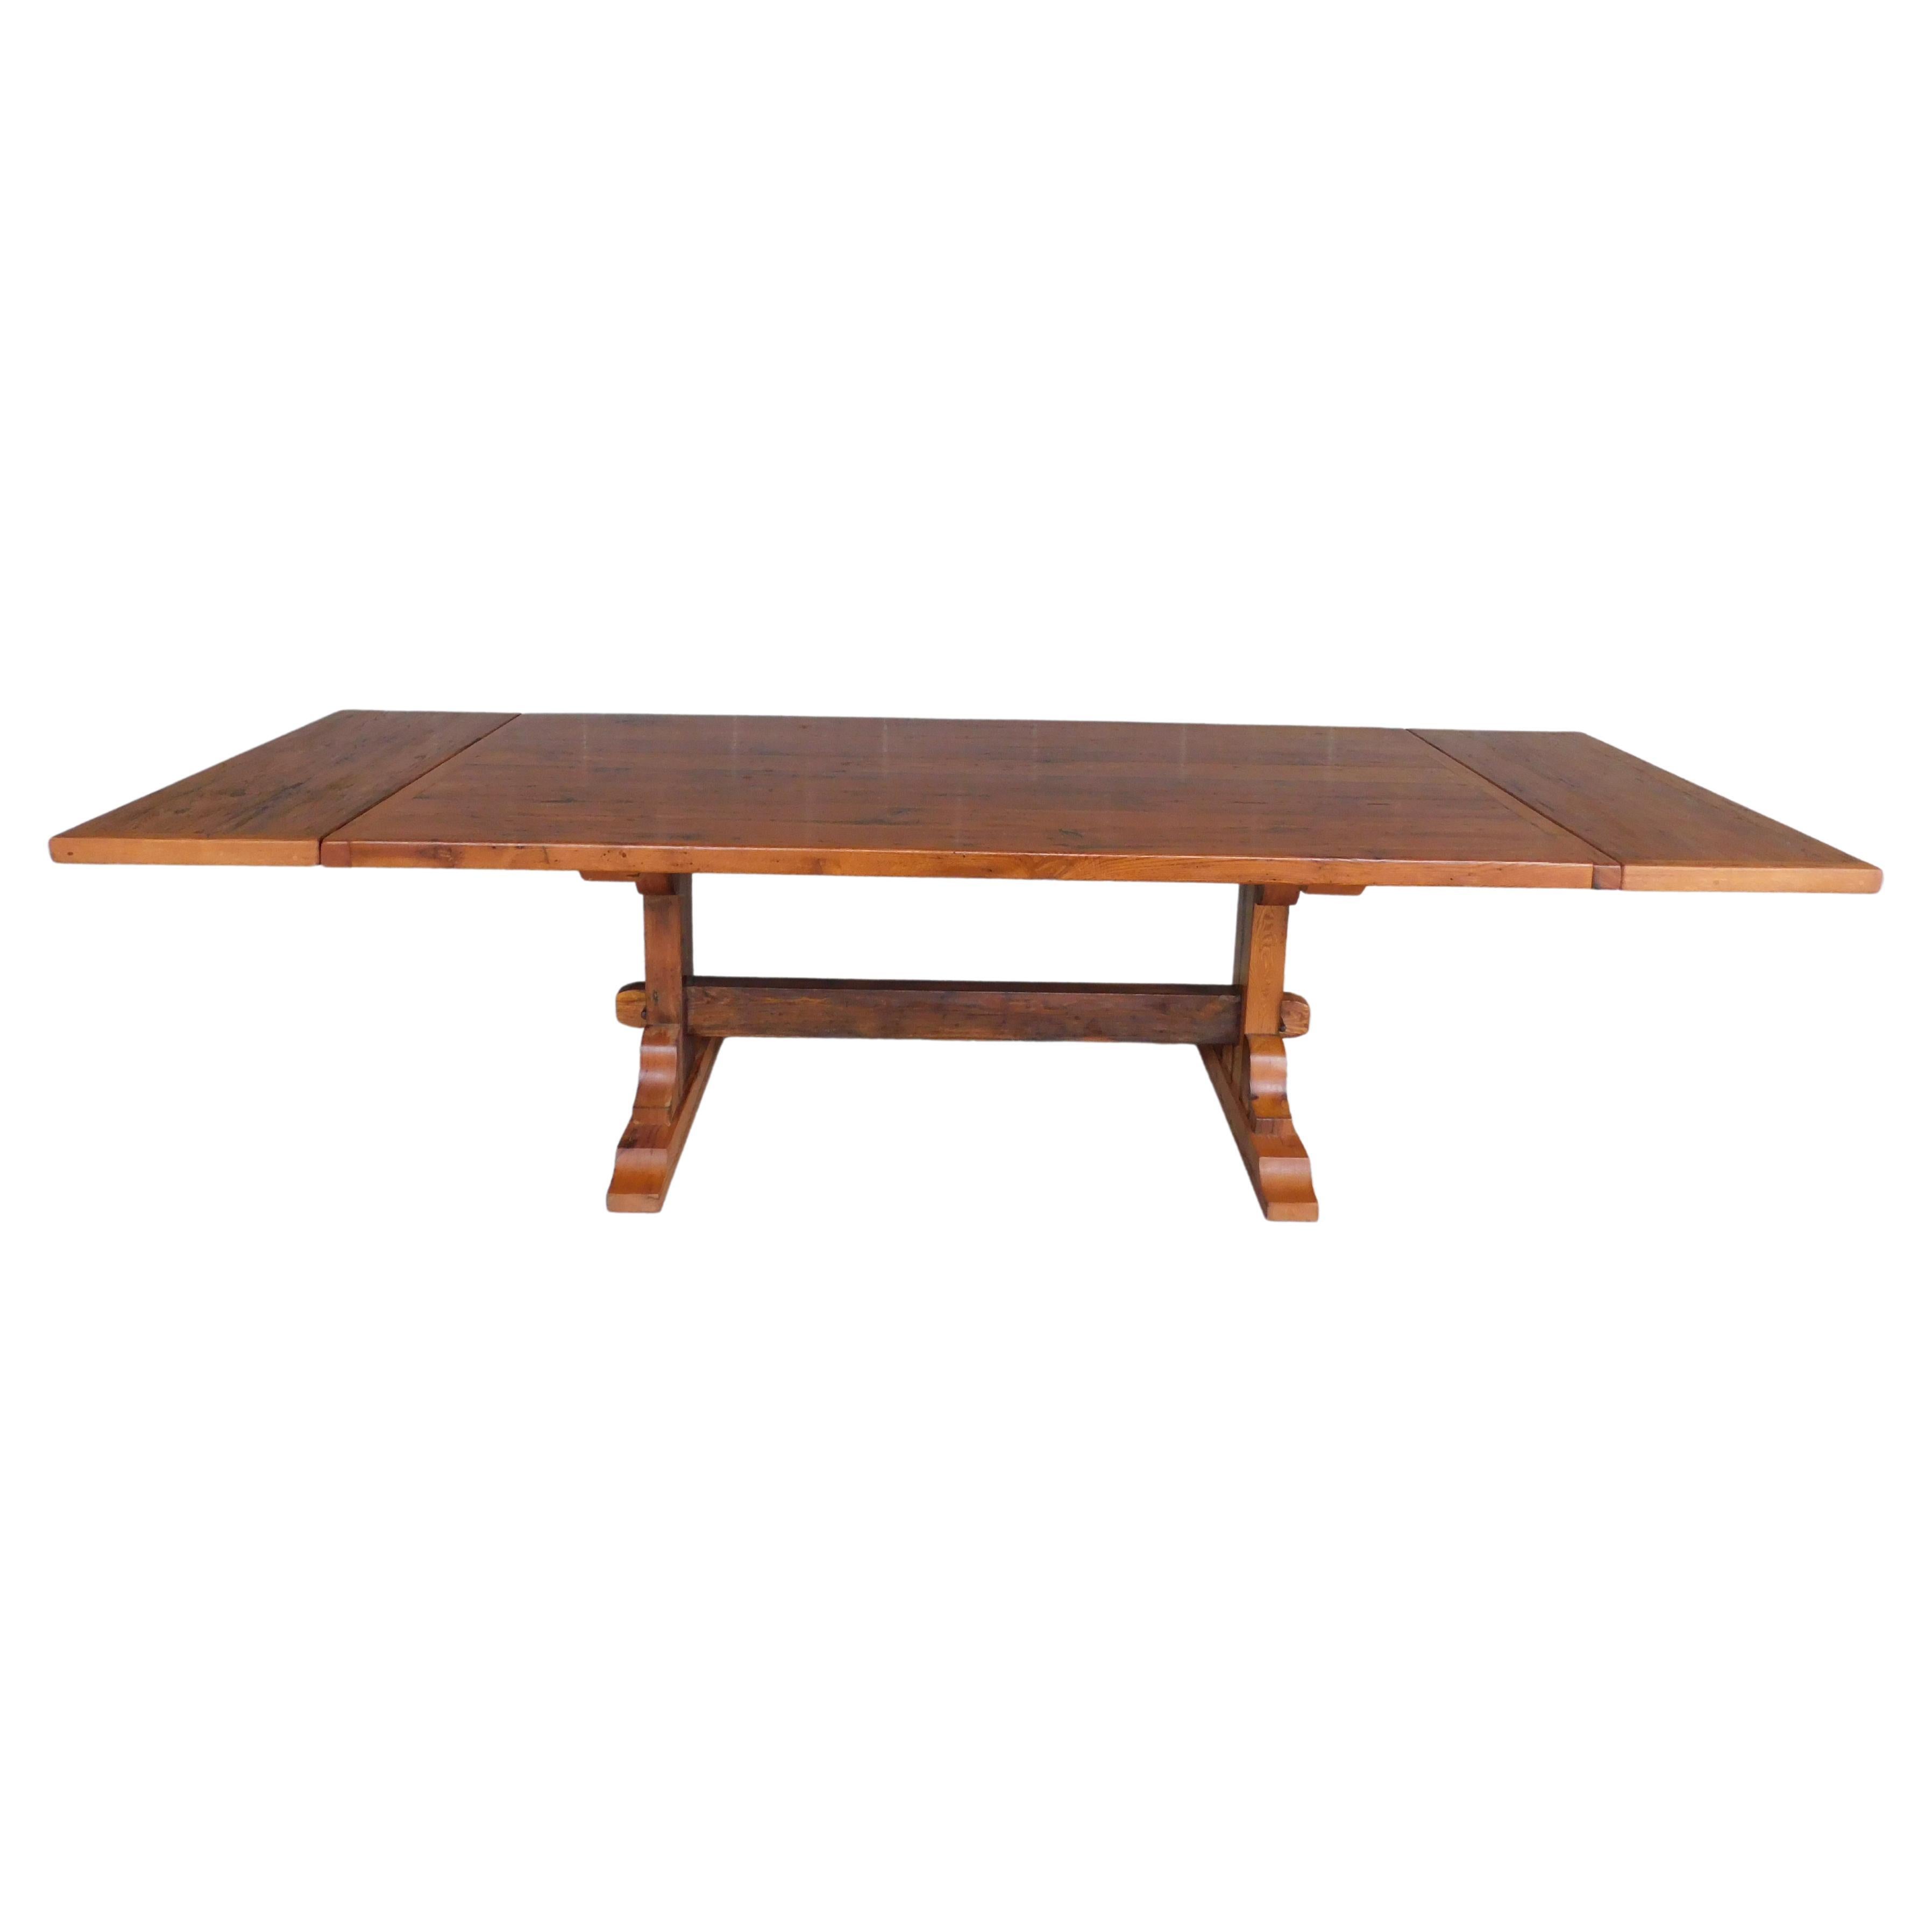 Custom Hand Made Reclaimed Chestnut Wood Top Trestle Base Dining Table